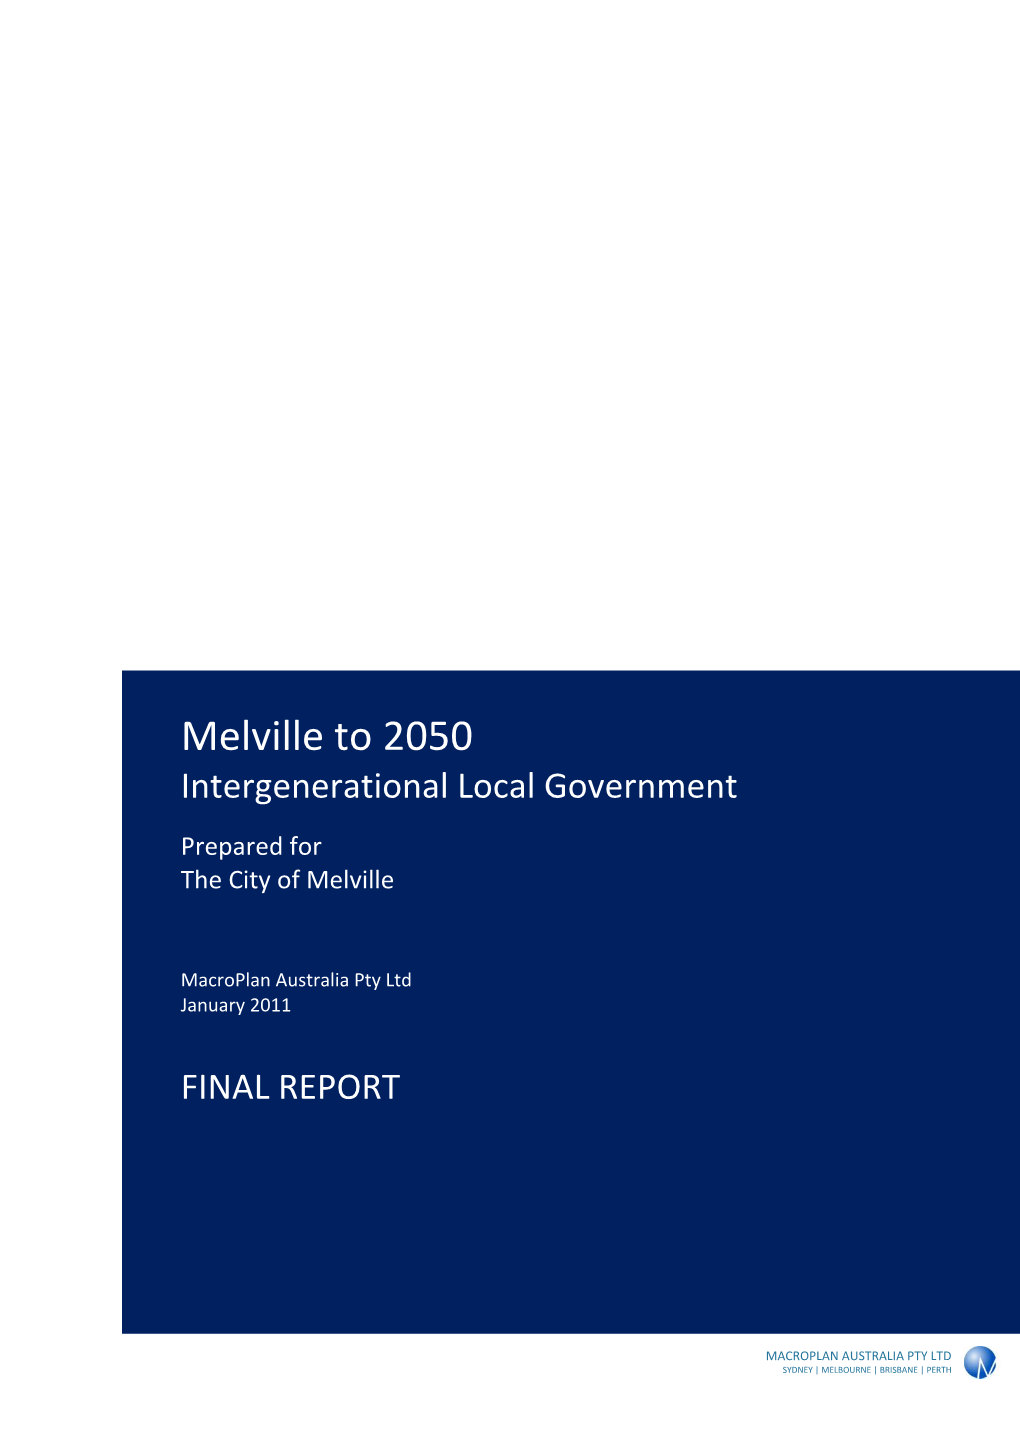 Melville to 2050 Finalreport